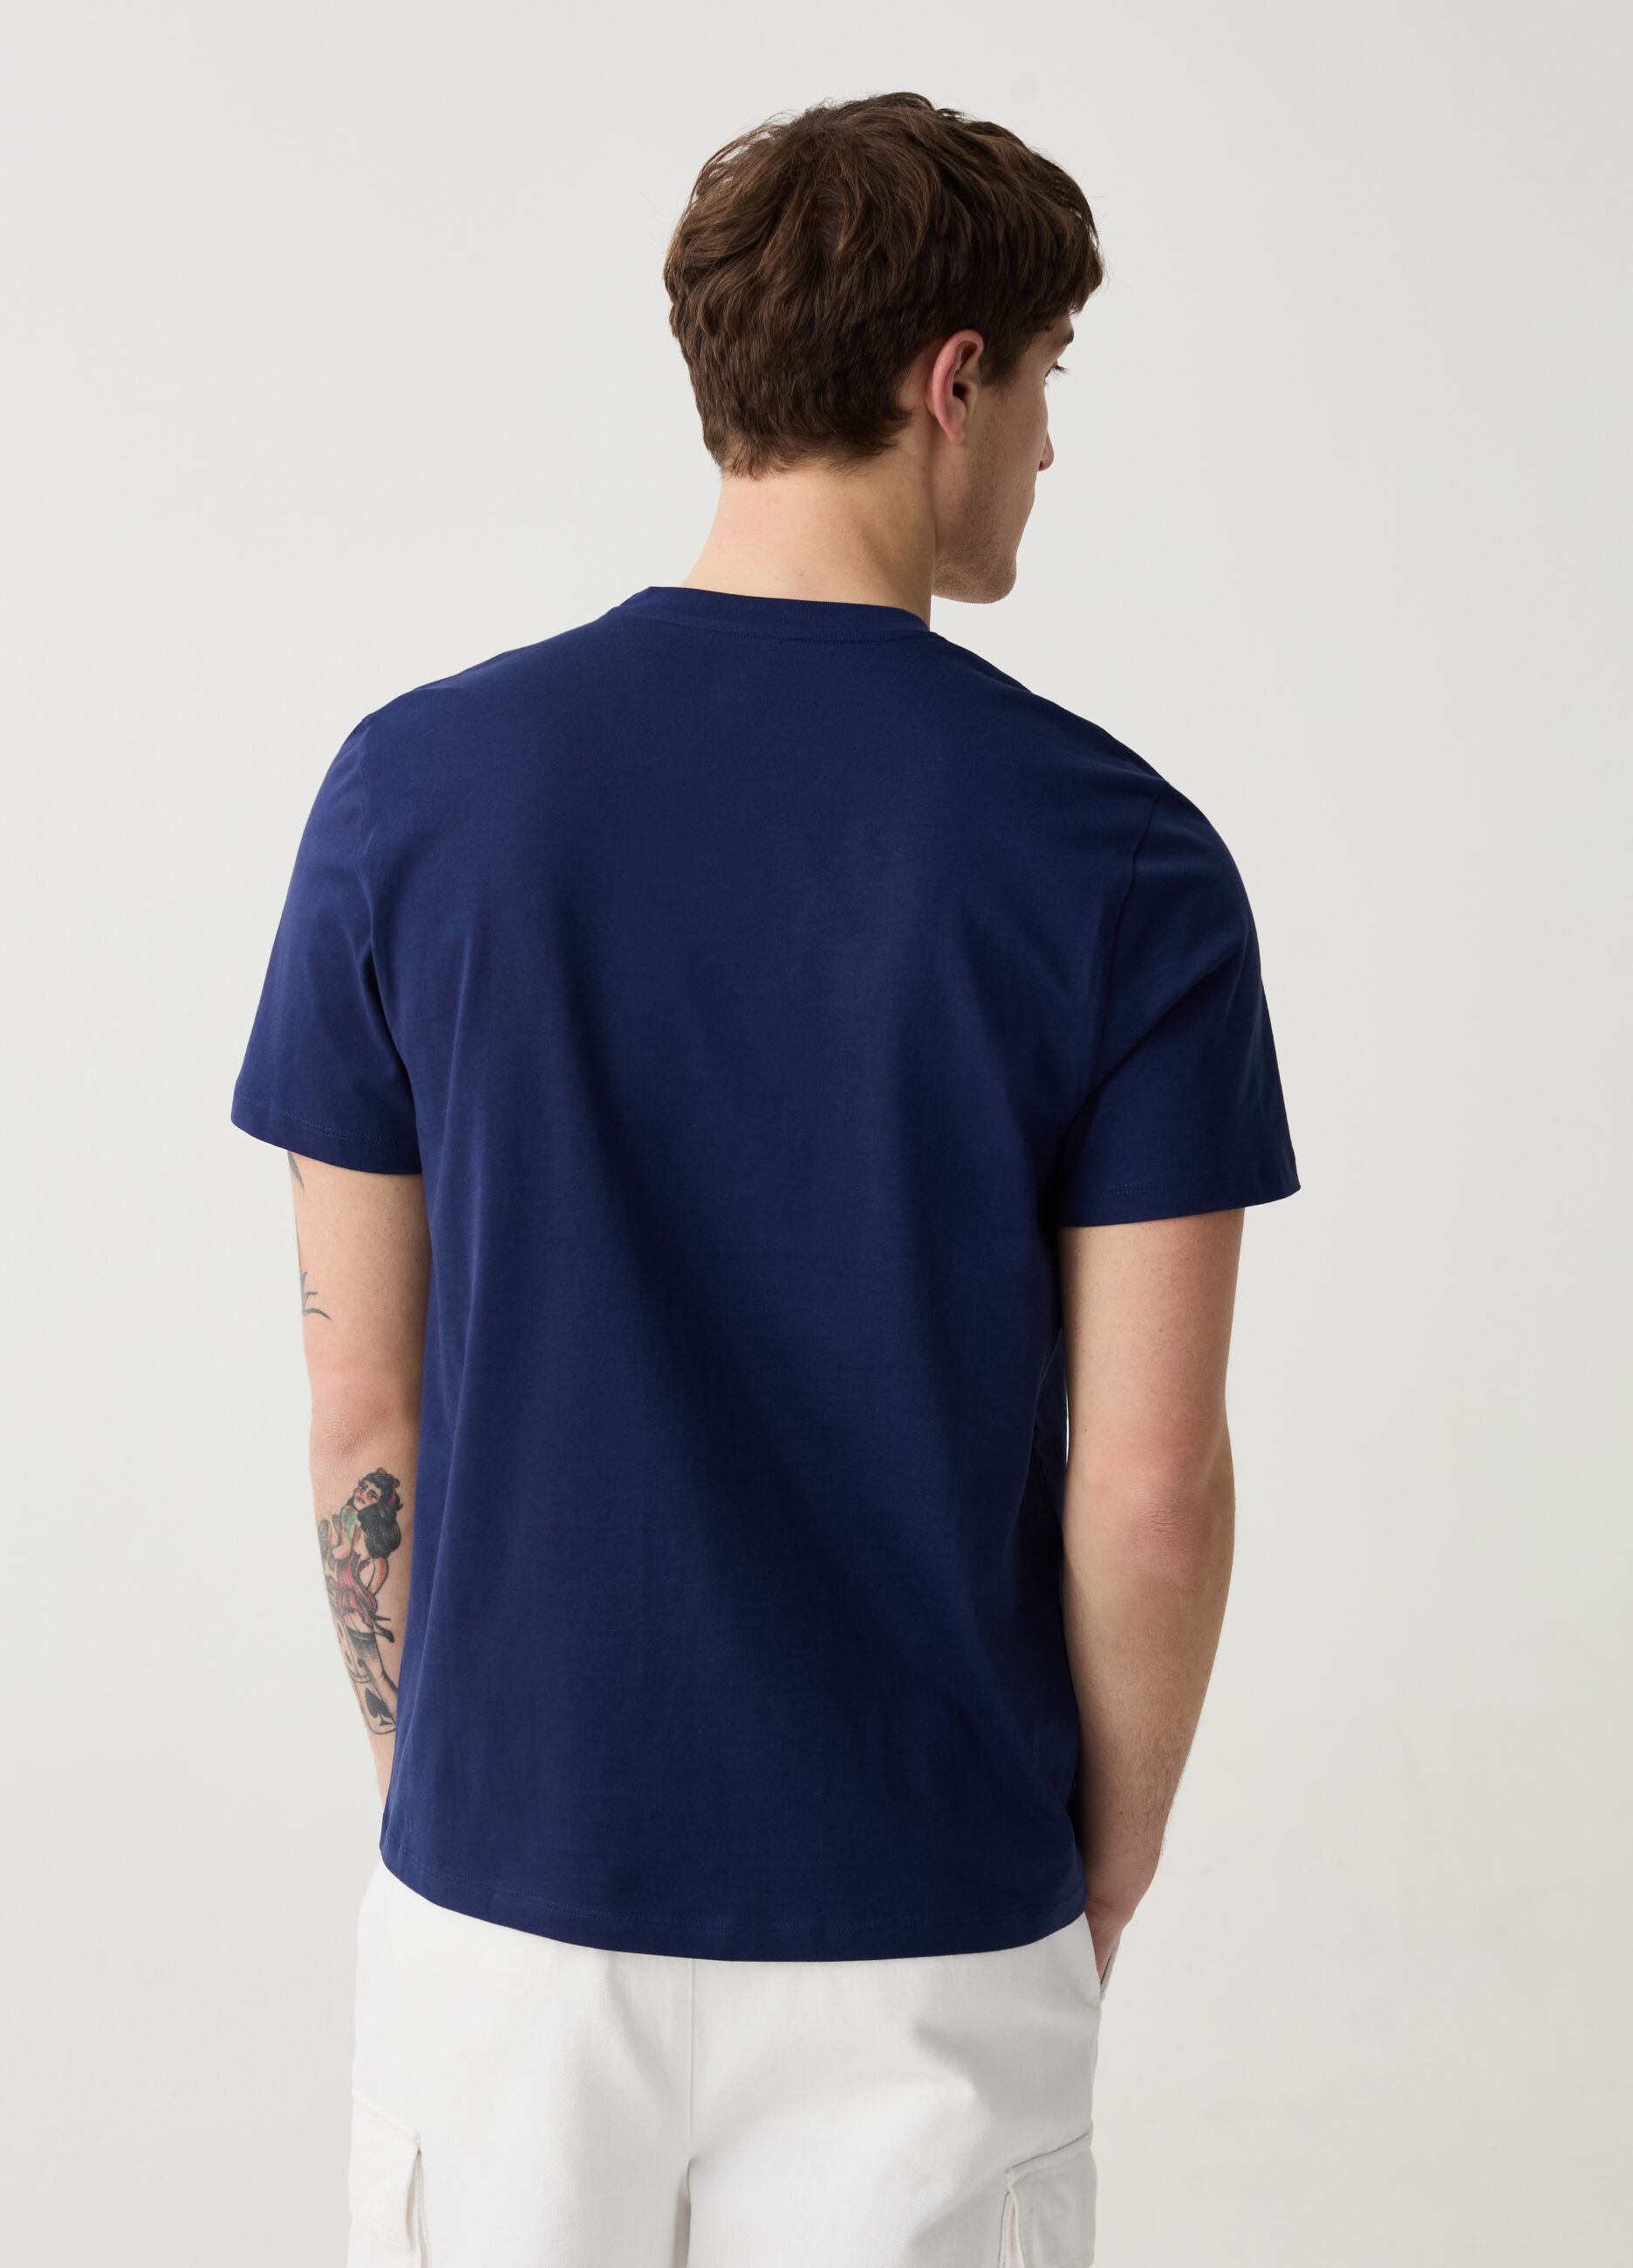 Organic cotton T-shirt with V neck